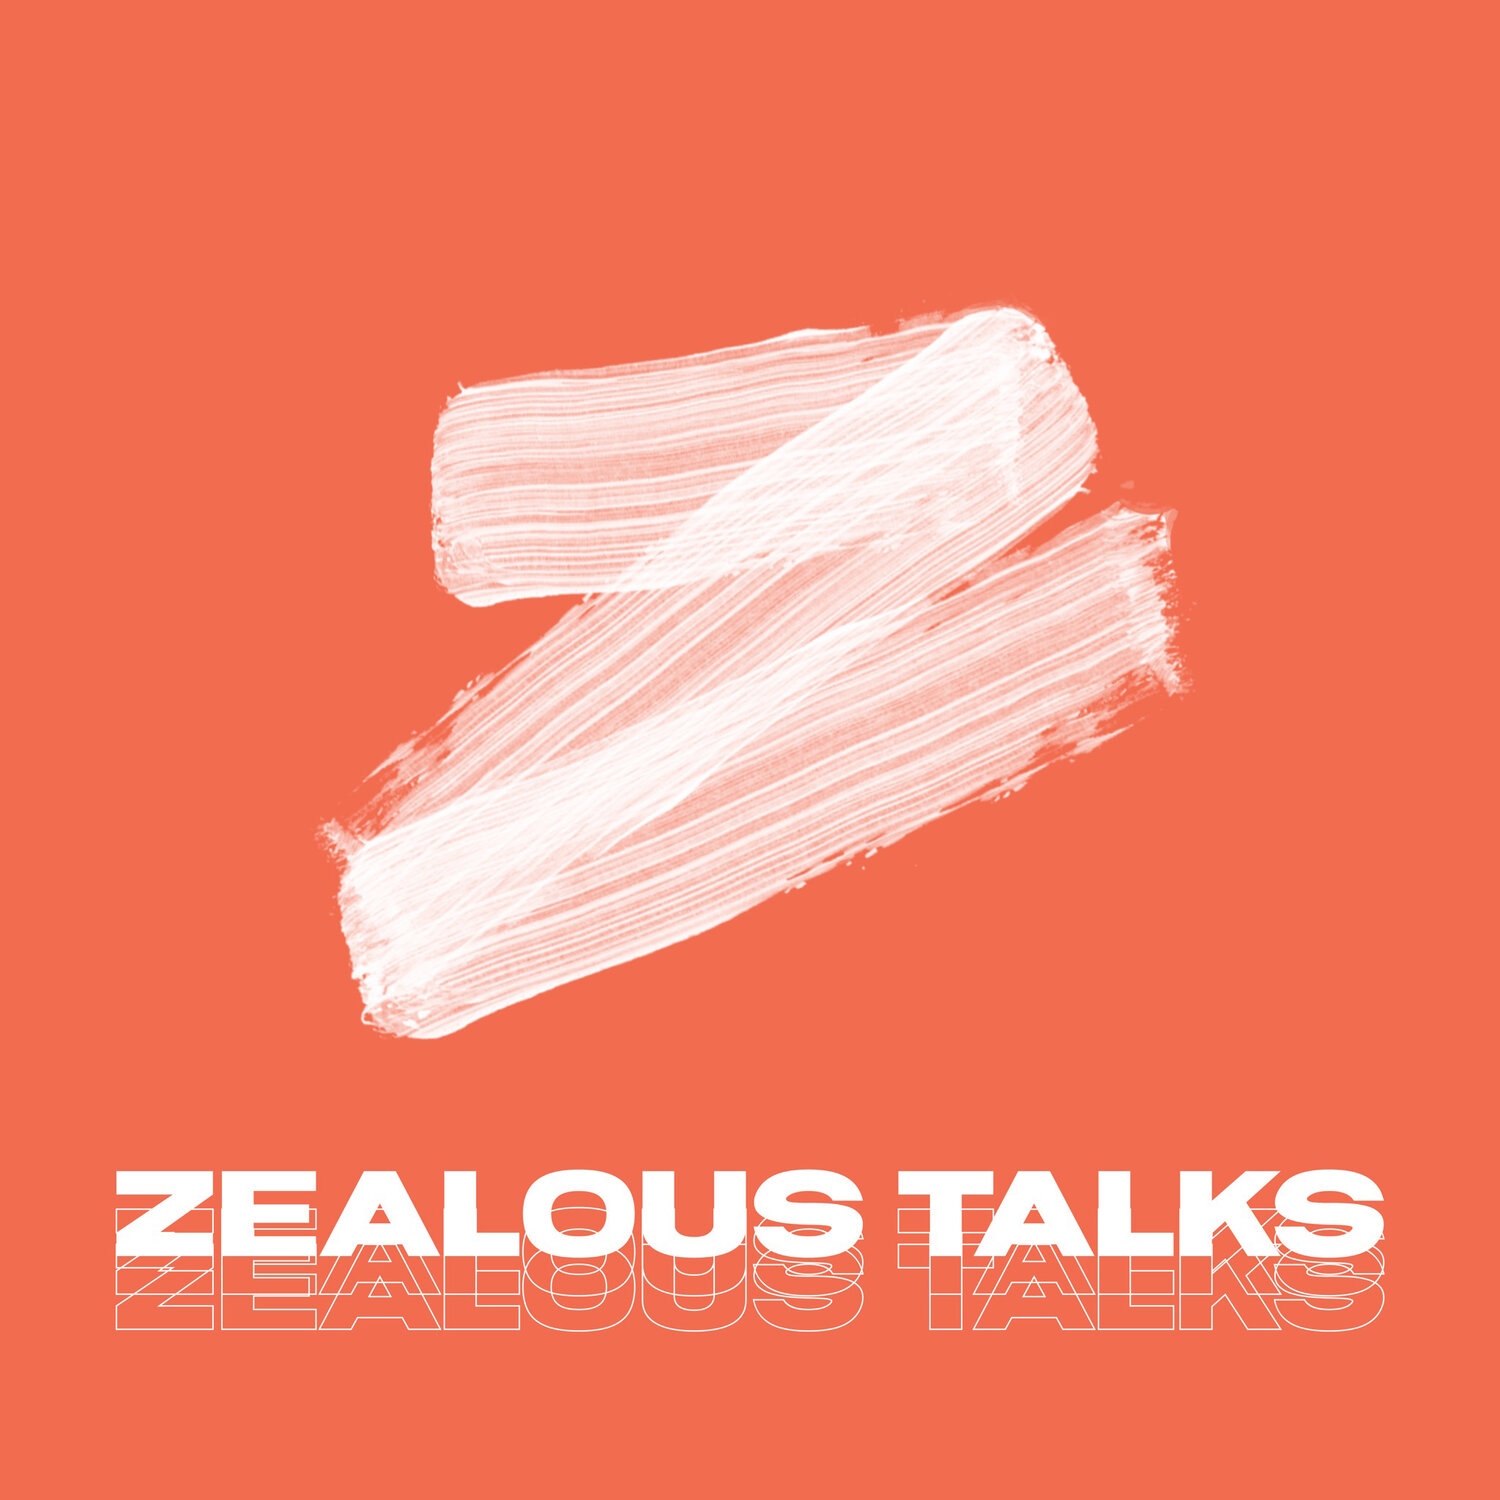 Zealous Talks